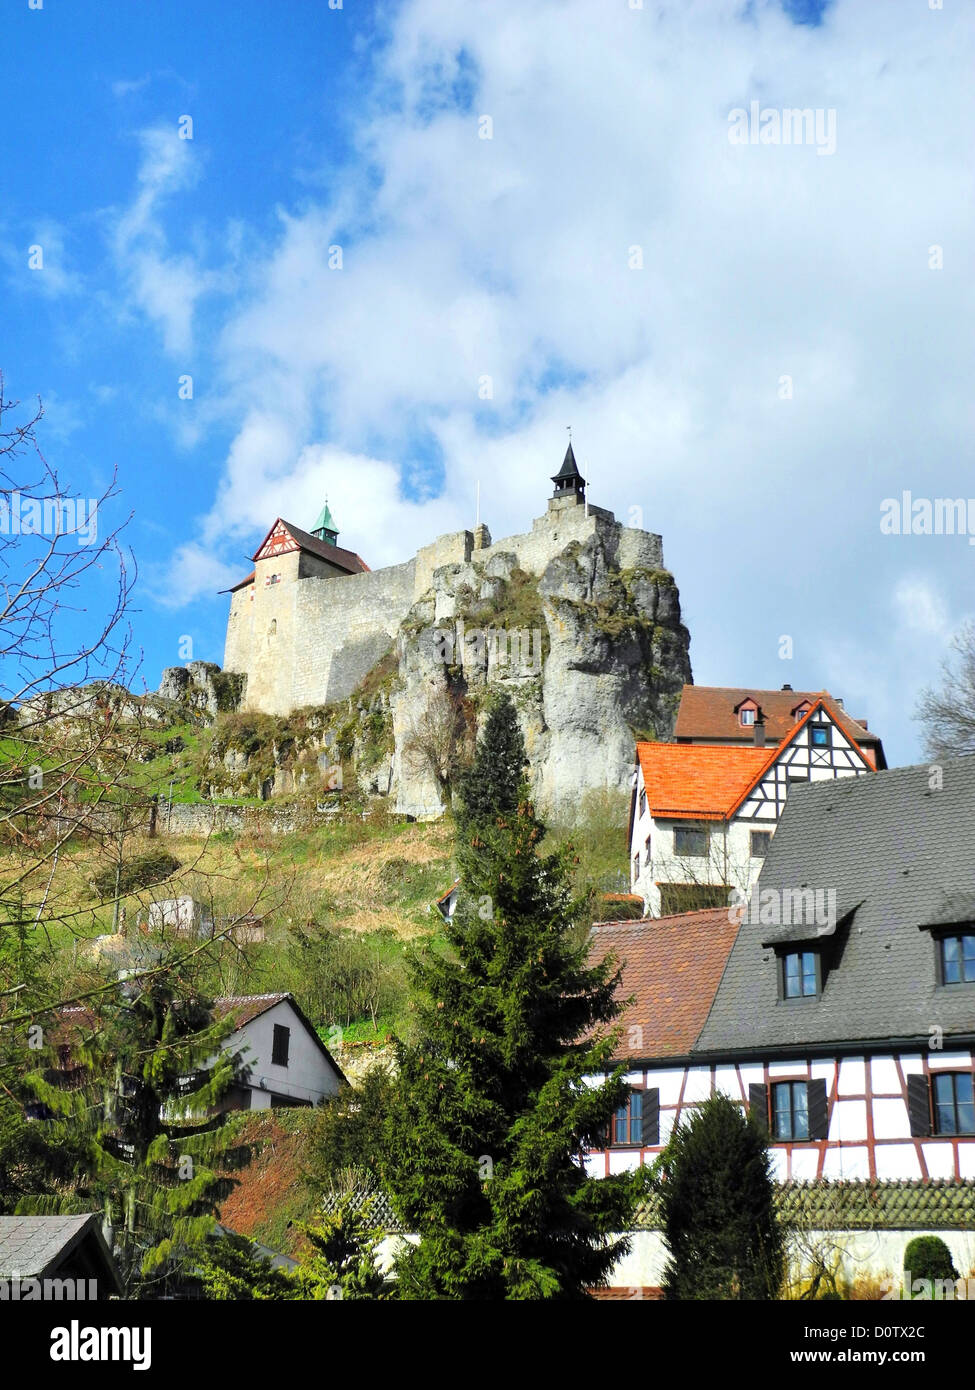 Germany, Europe, Franconian Switzerland, Europe, churches customs brook, castle, castle high stone, sky, blue, heap clouds, clou Stock Photo